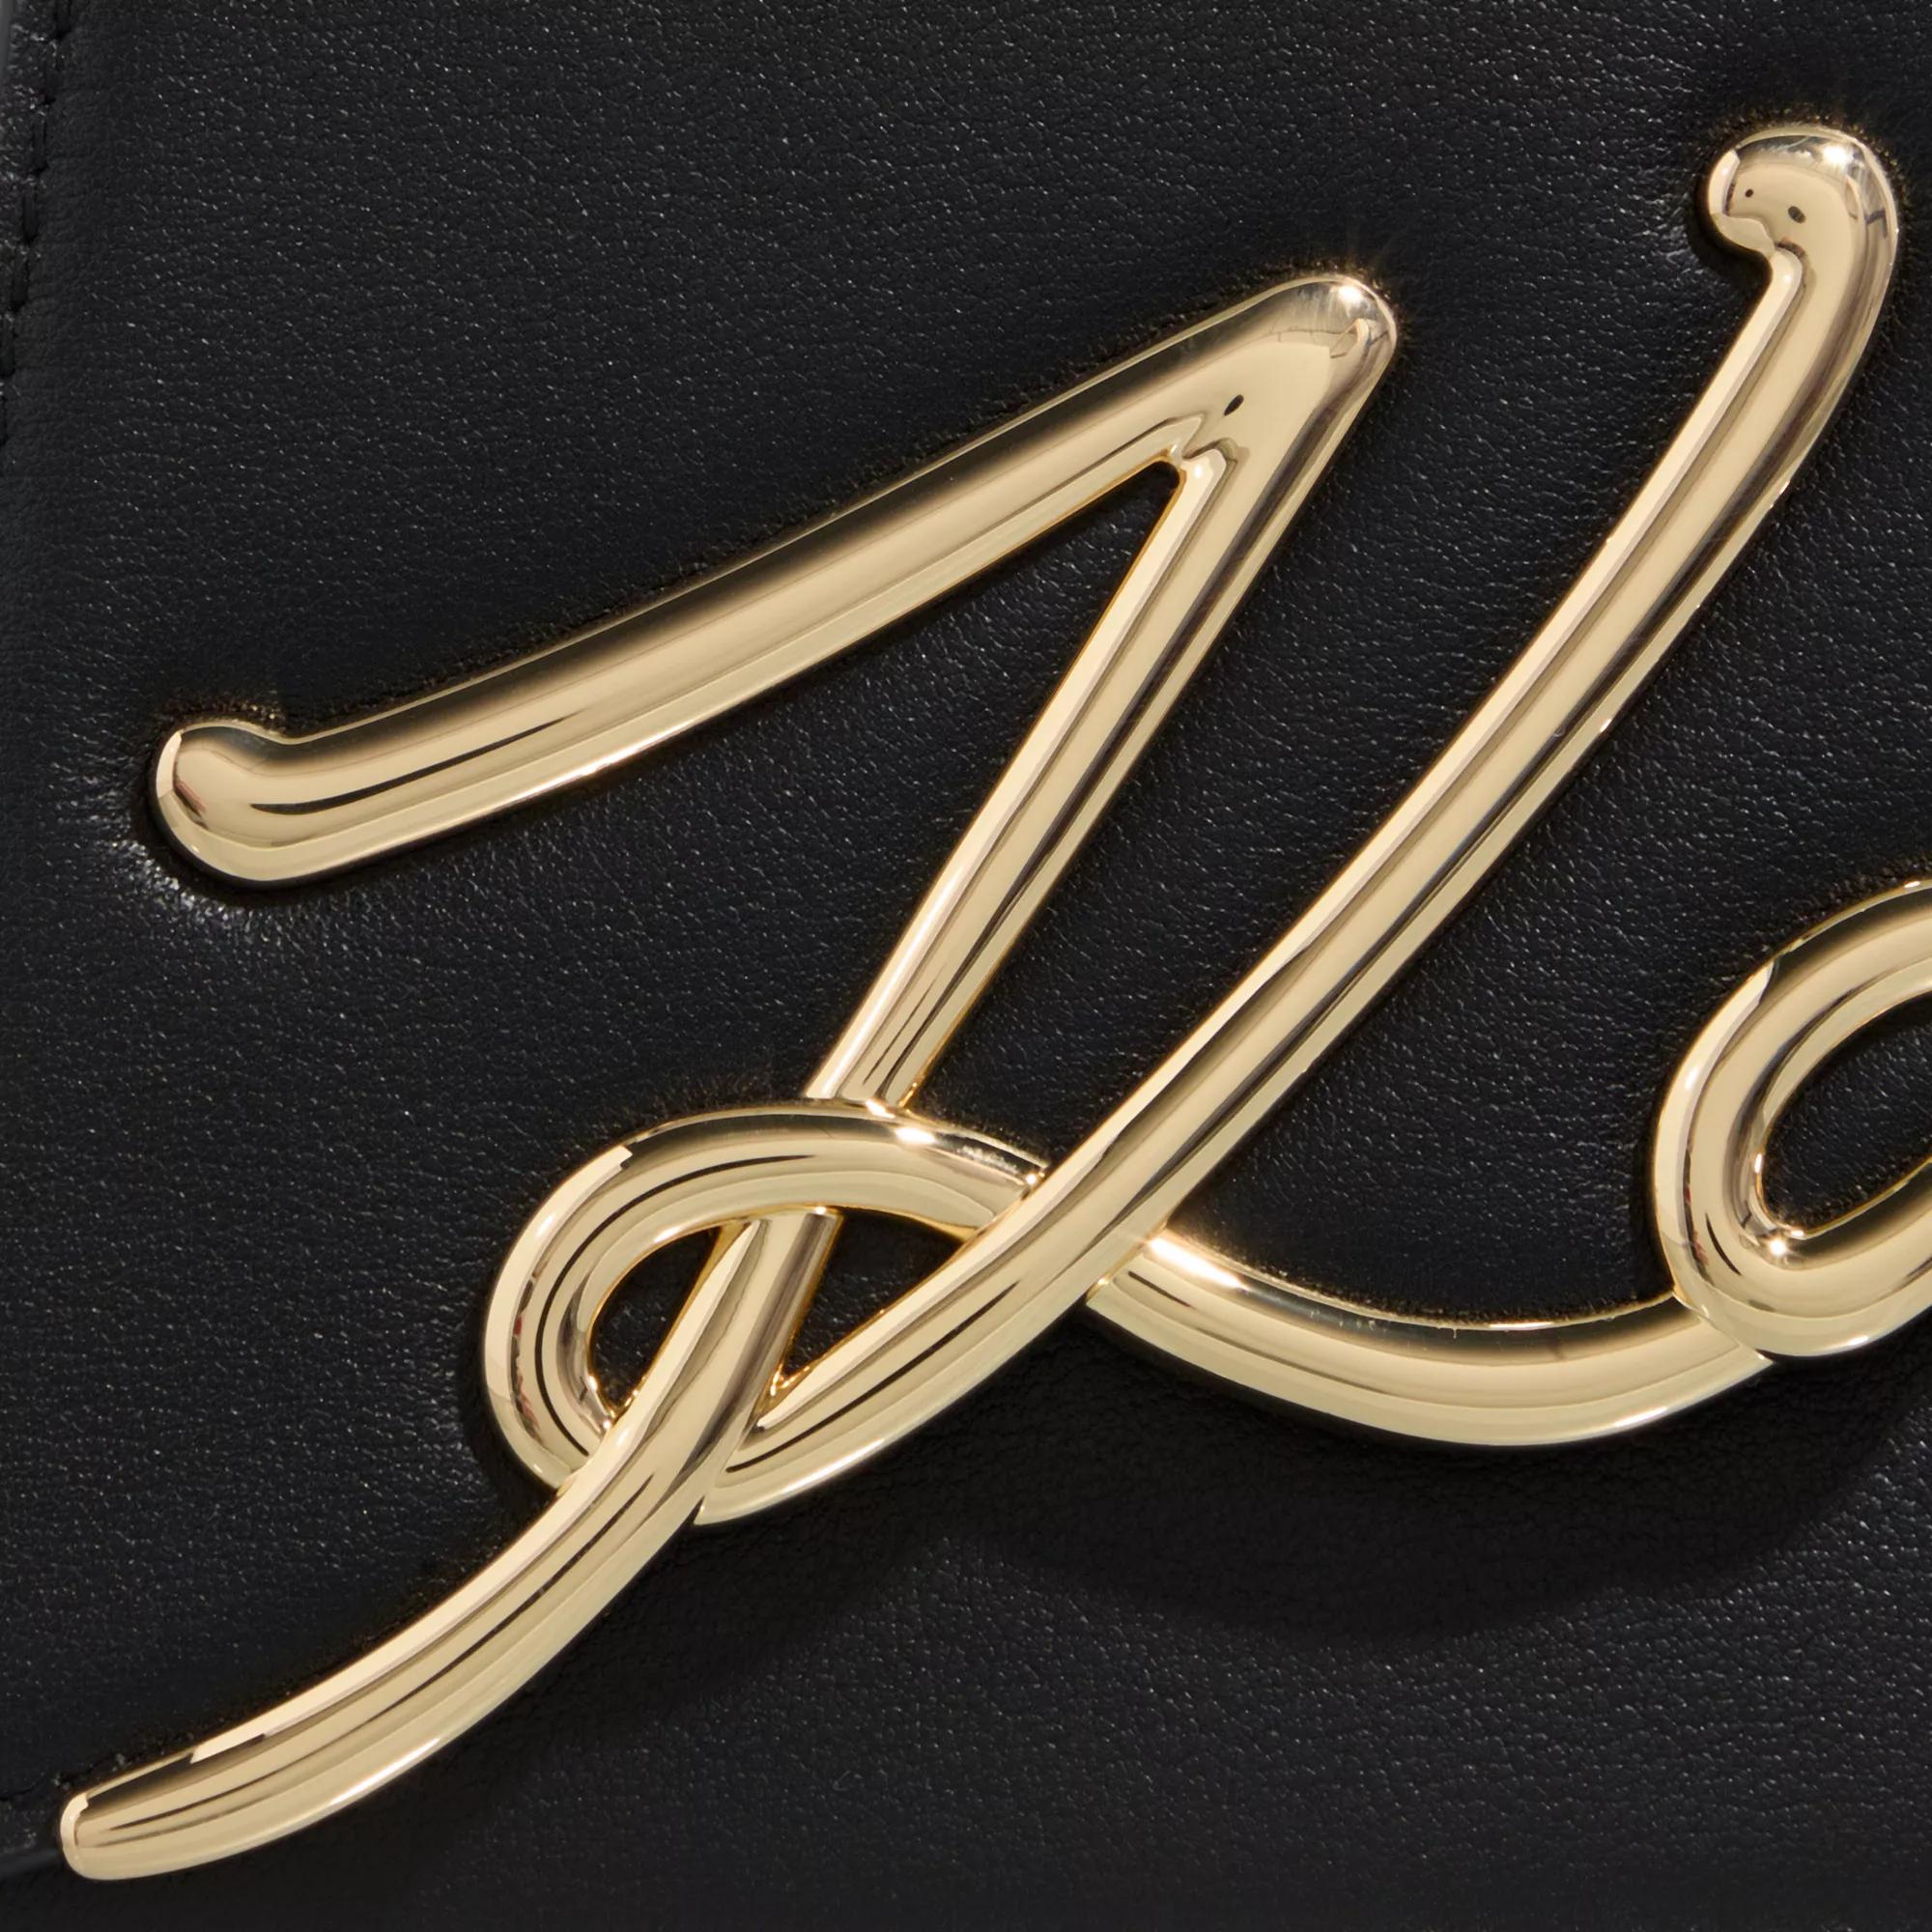 Karl Lagerfeld Crossbody bags K Signature 2.0 Md Crossbody in zwart